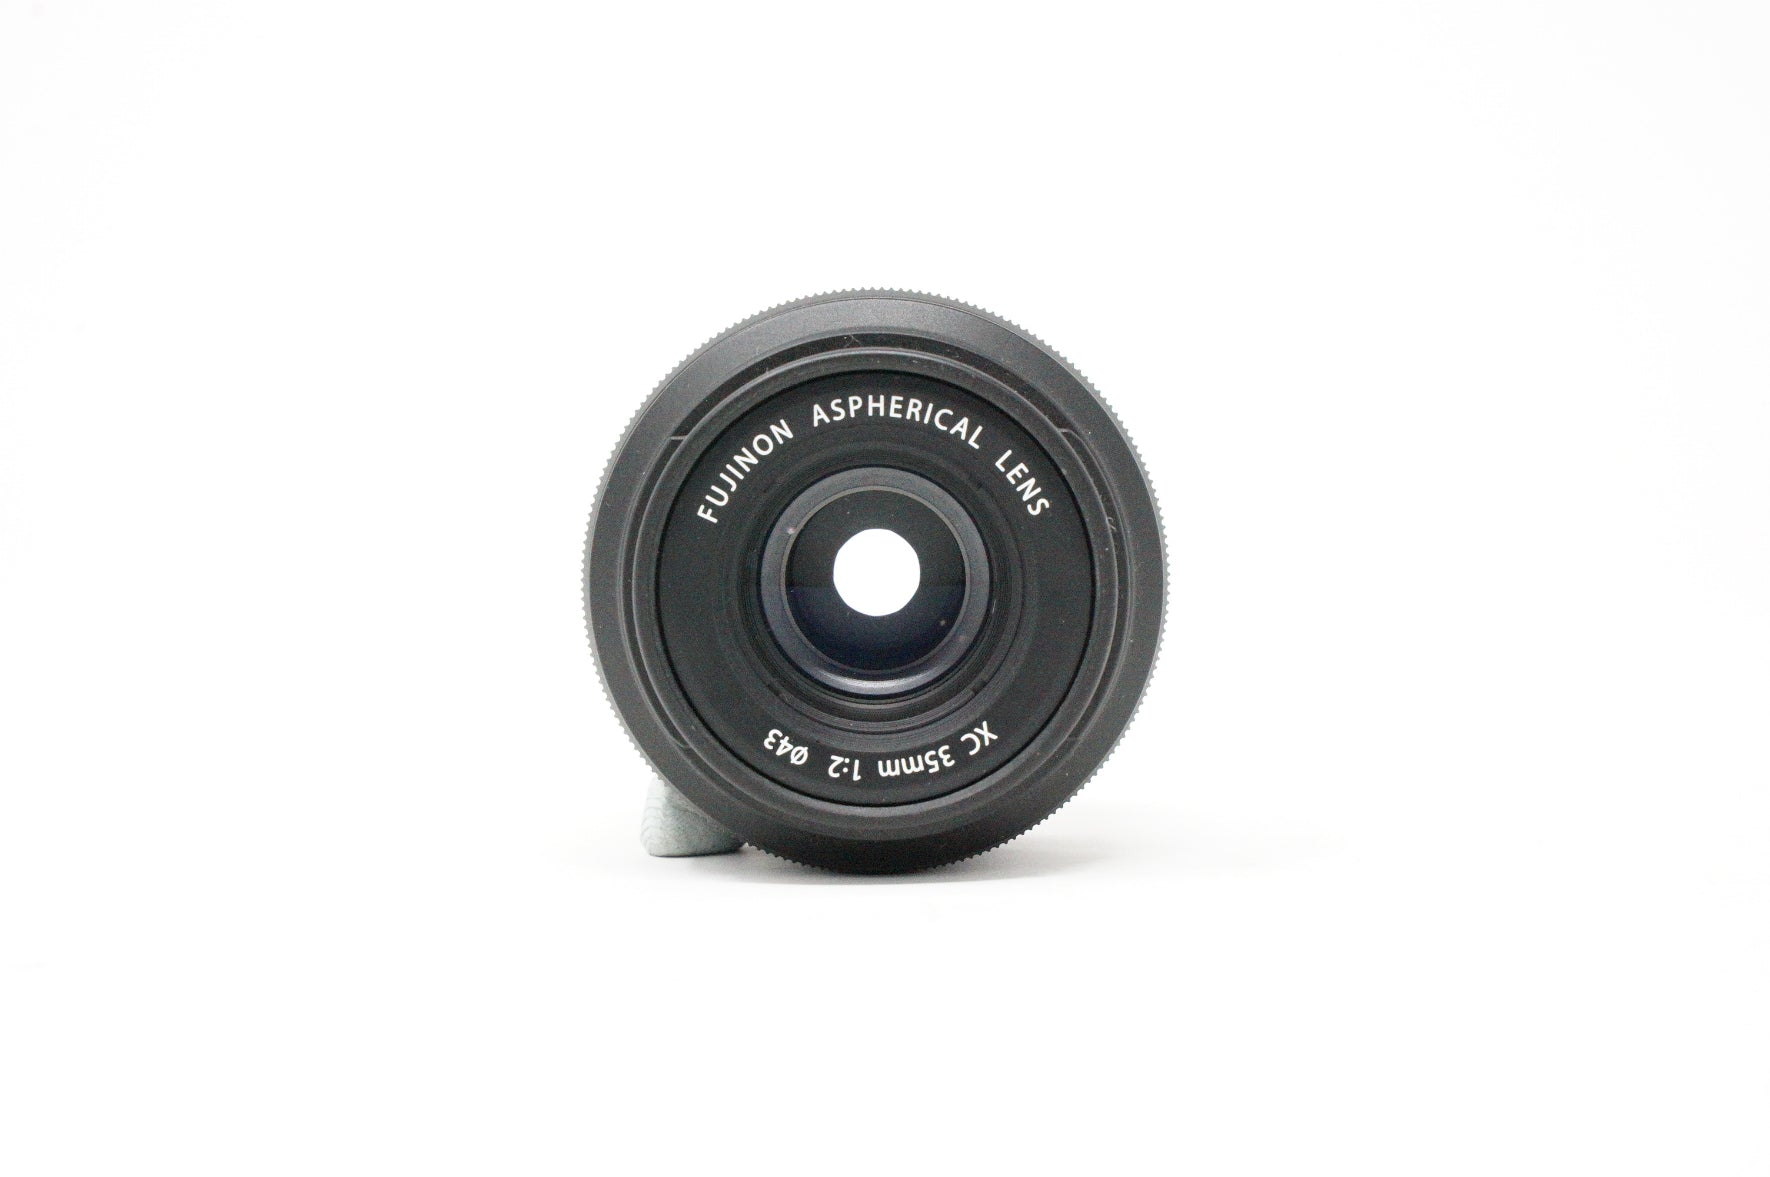 Used Fujifilm XC 35mm F2 Prime lens